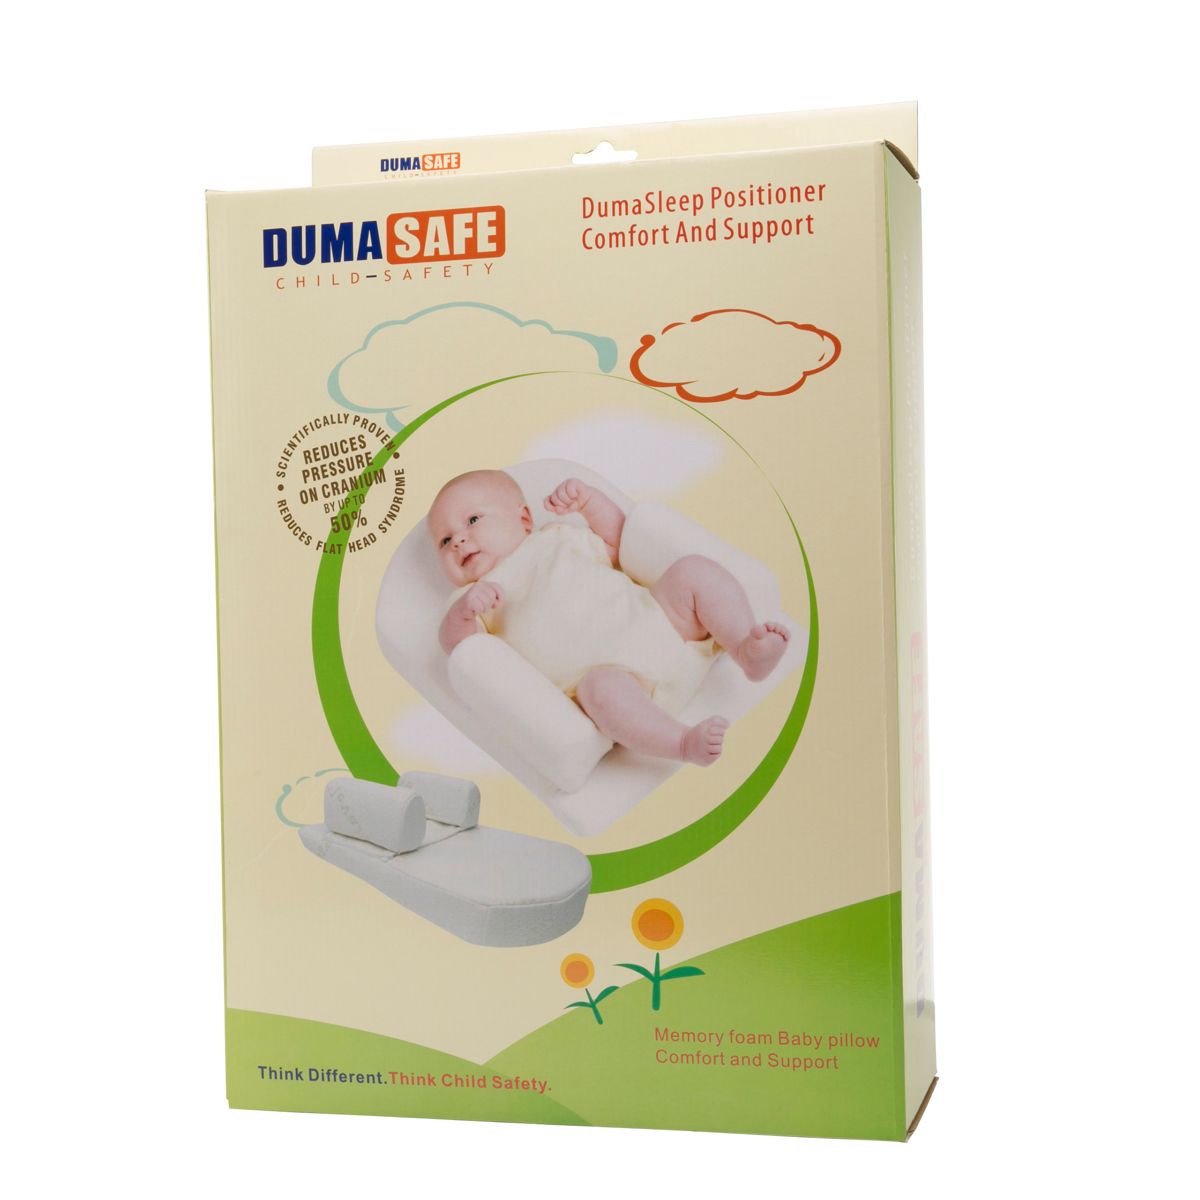 Duma Safe Child Safety Sleep Positioner Small